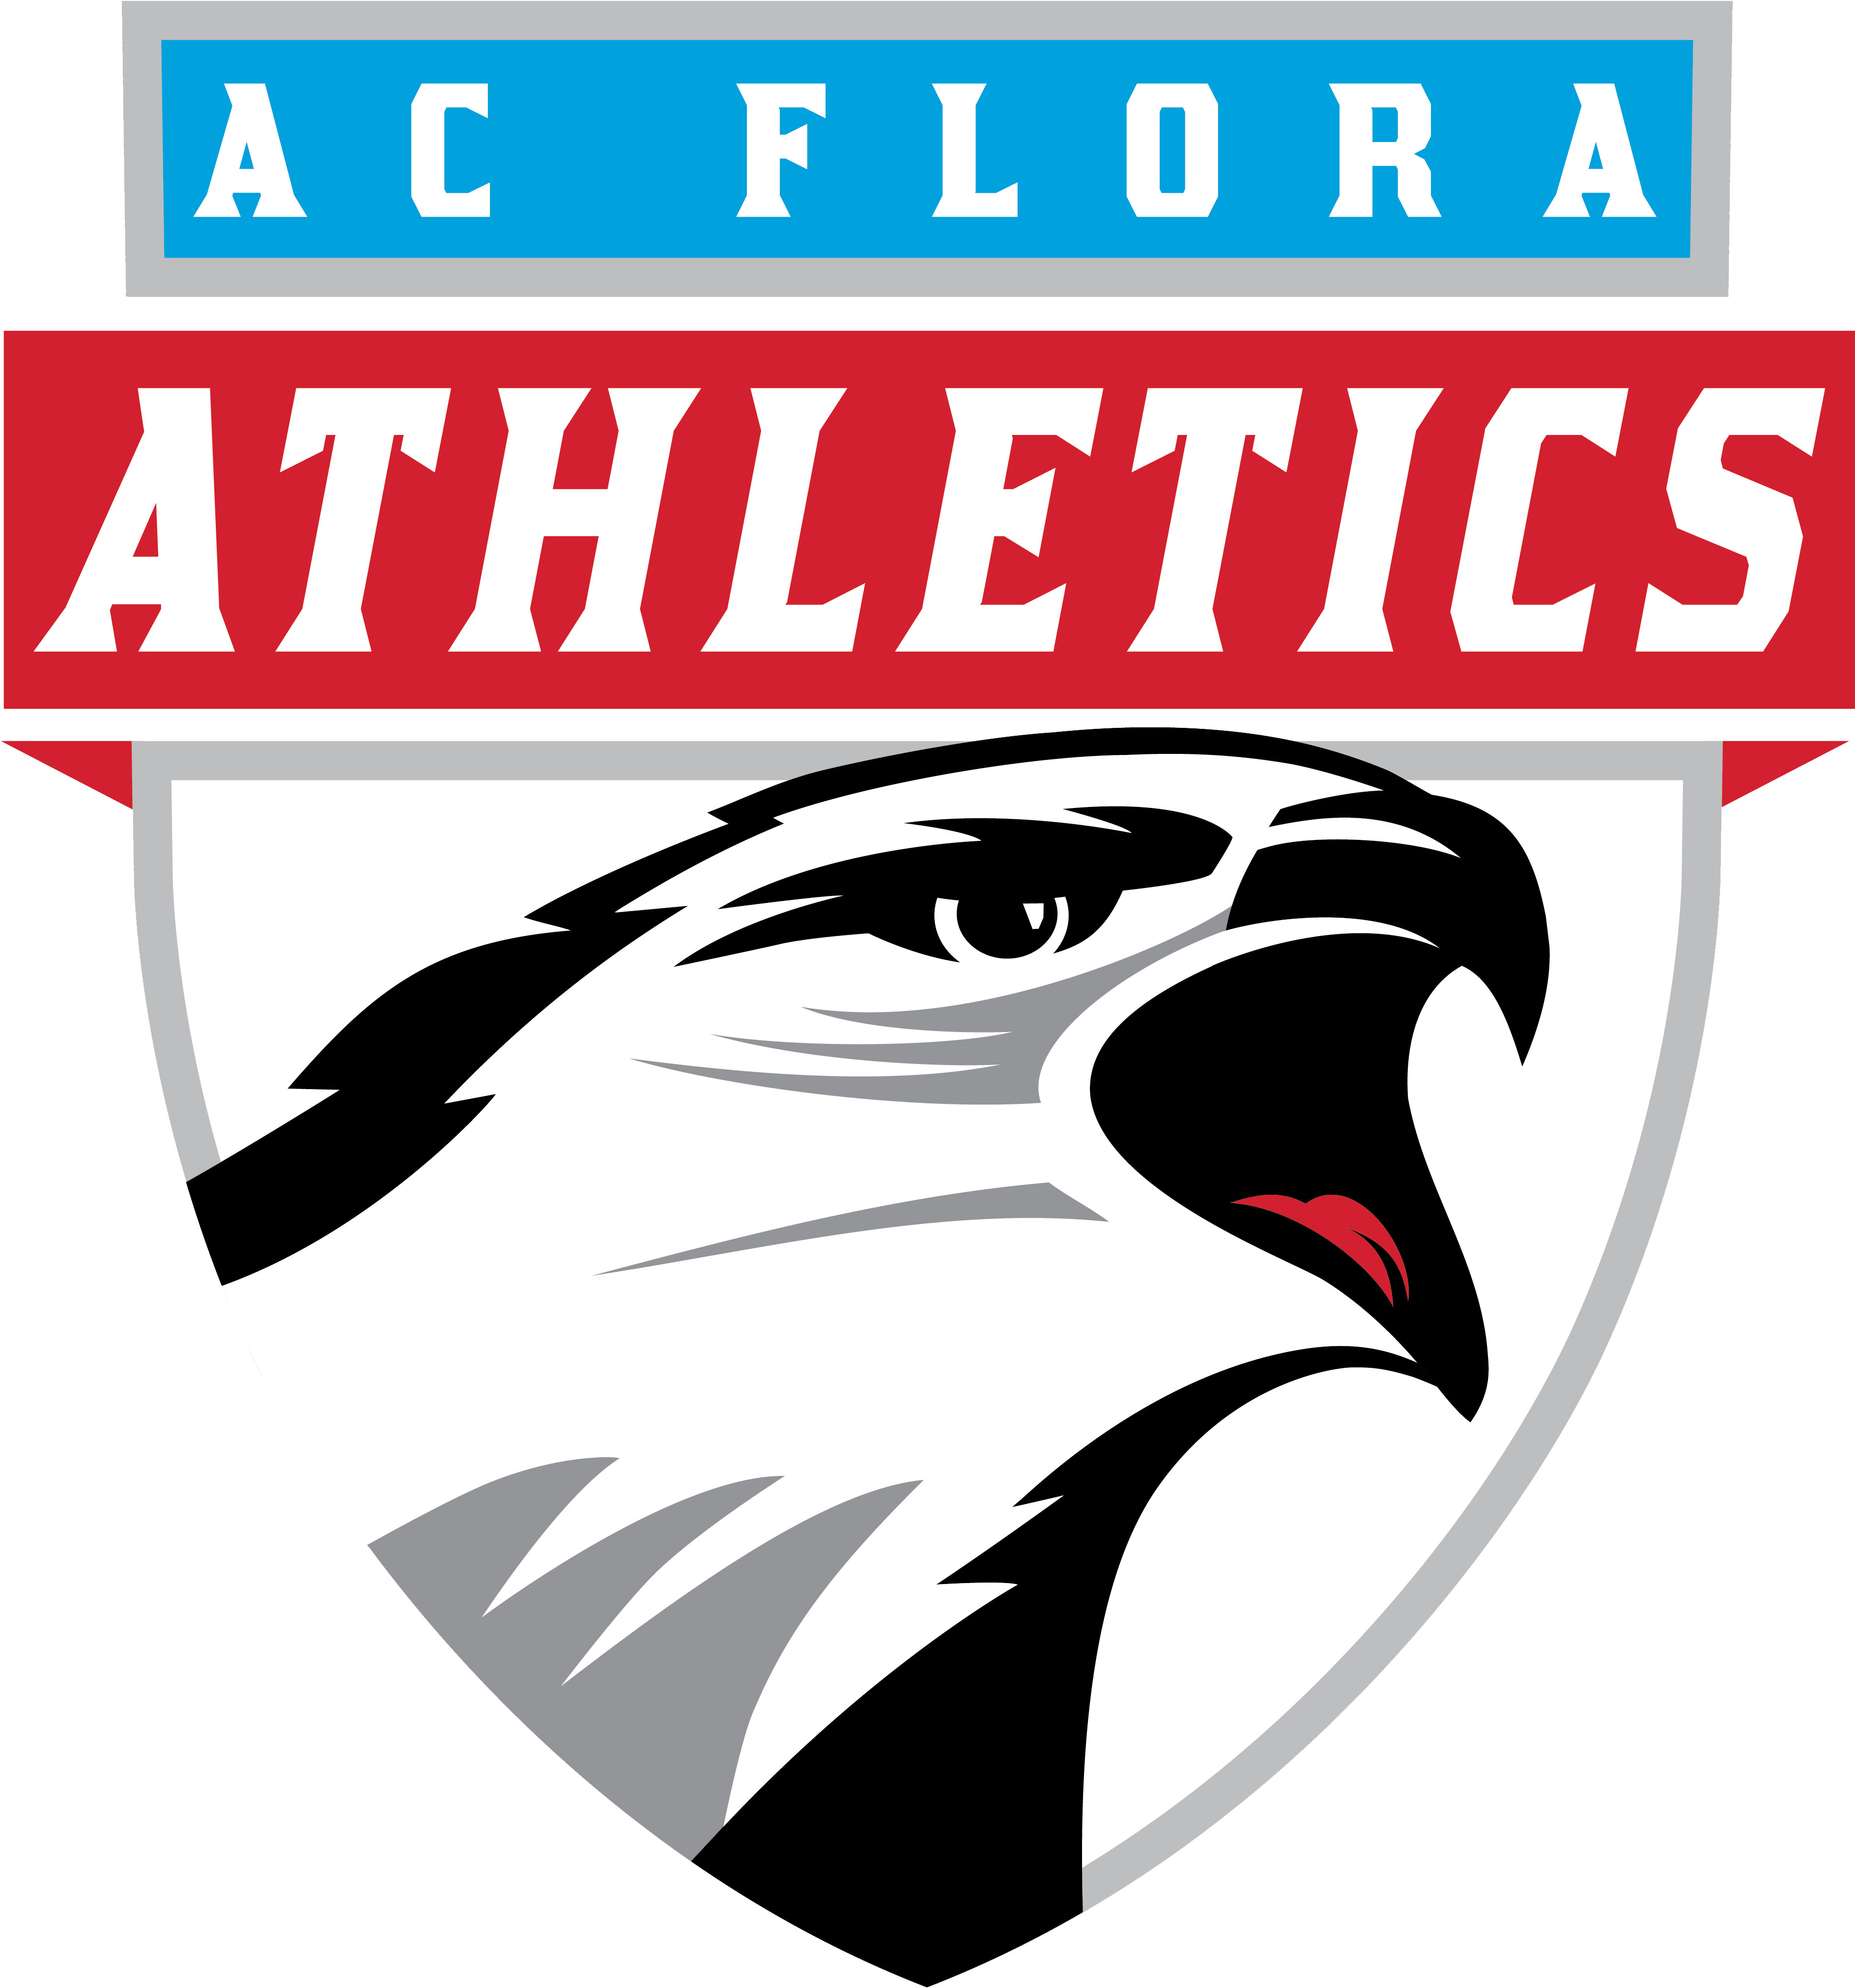 Ac Flora Falcons - A.c. Flora High School (4167x4167)